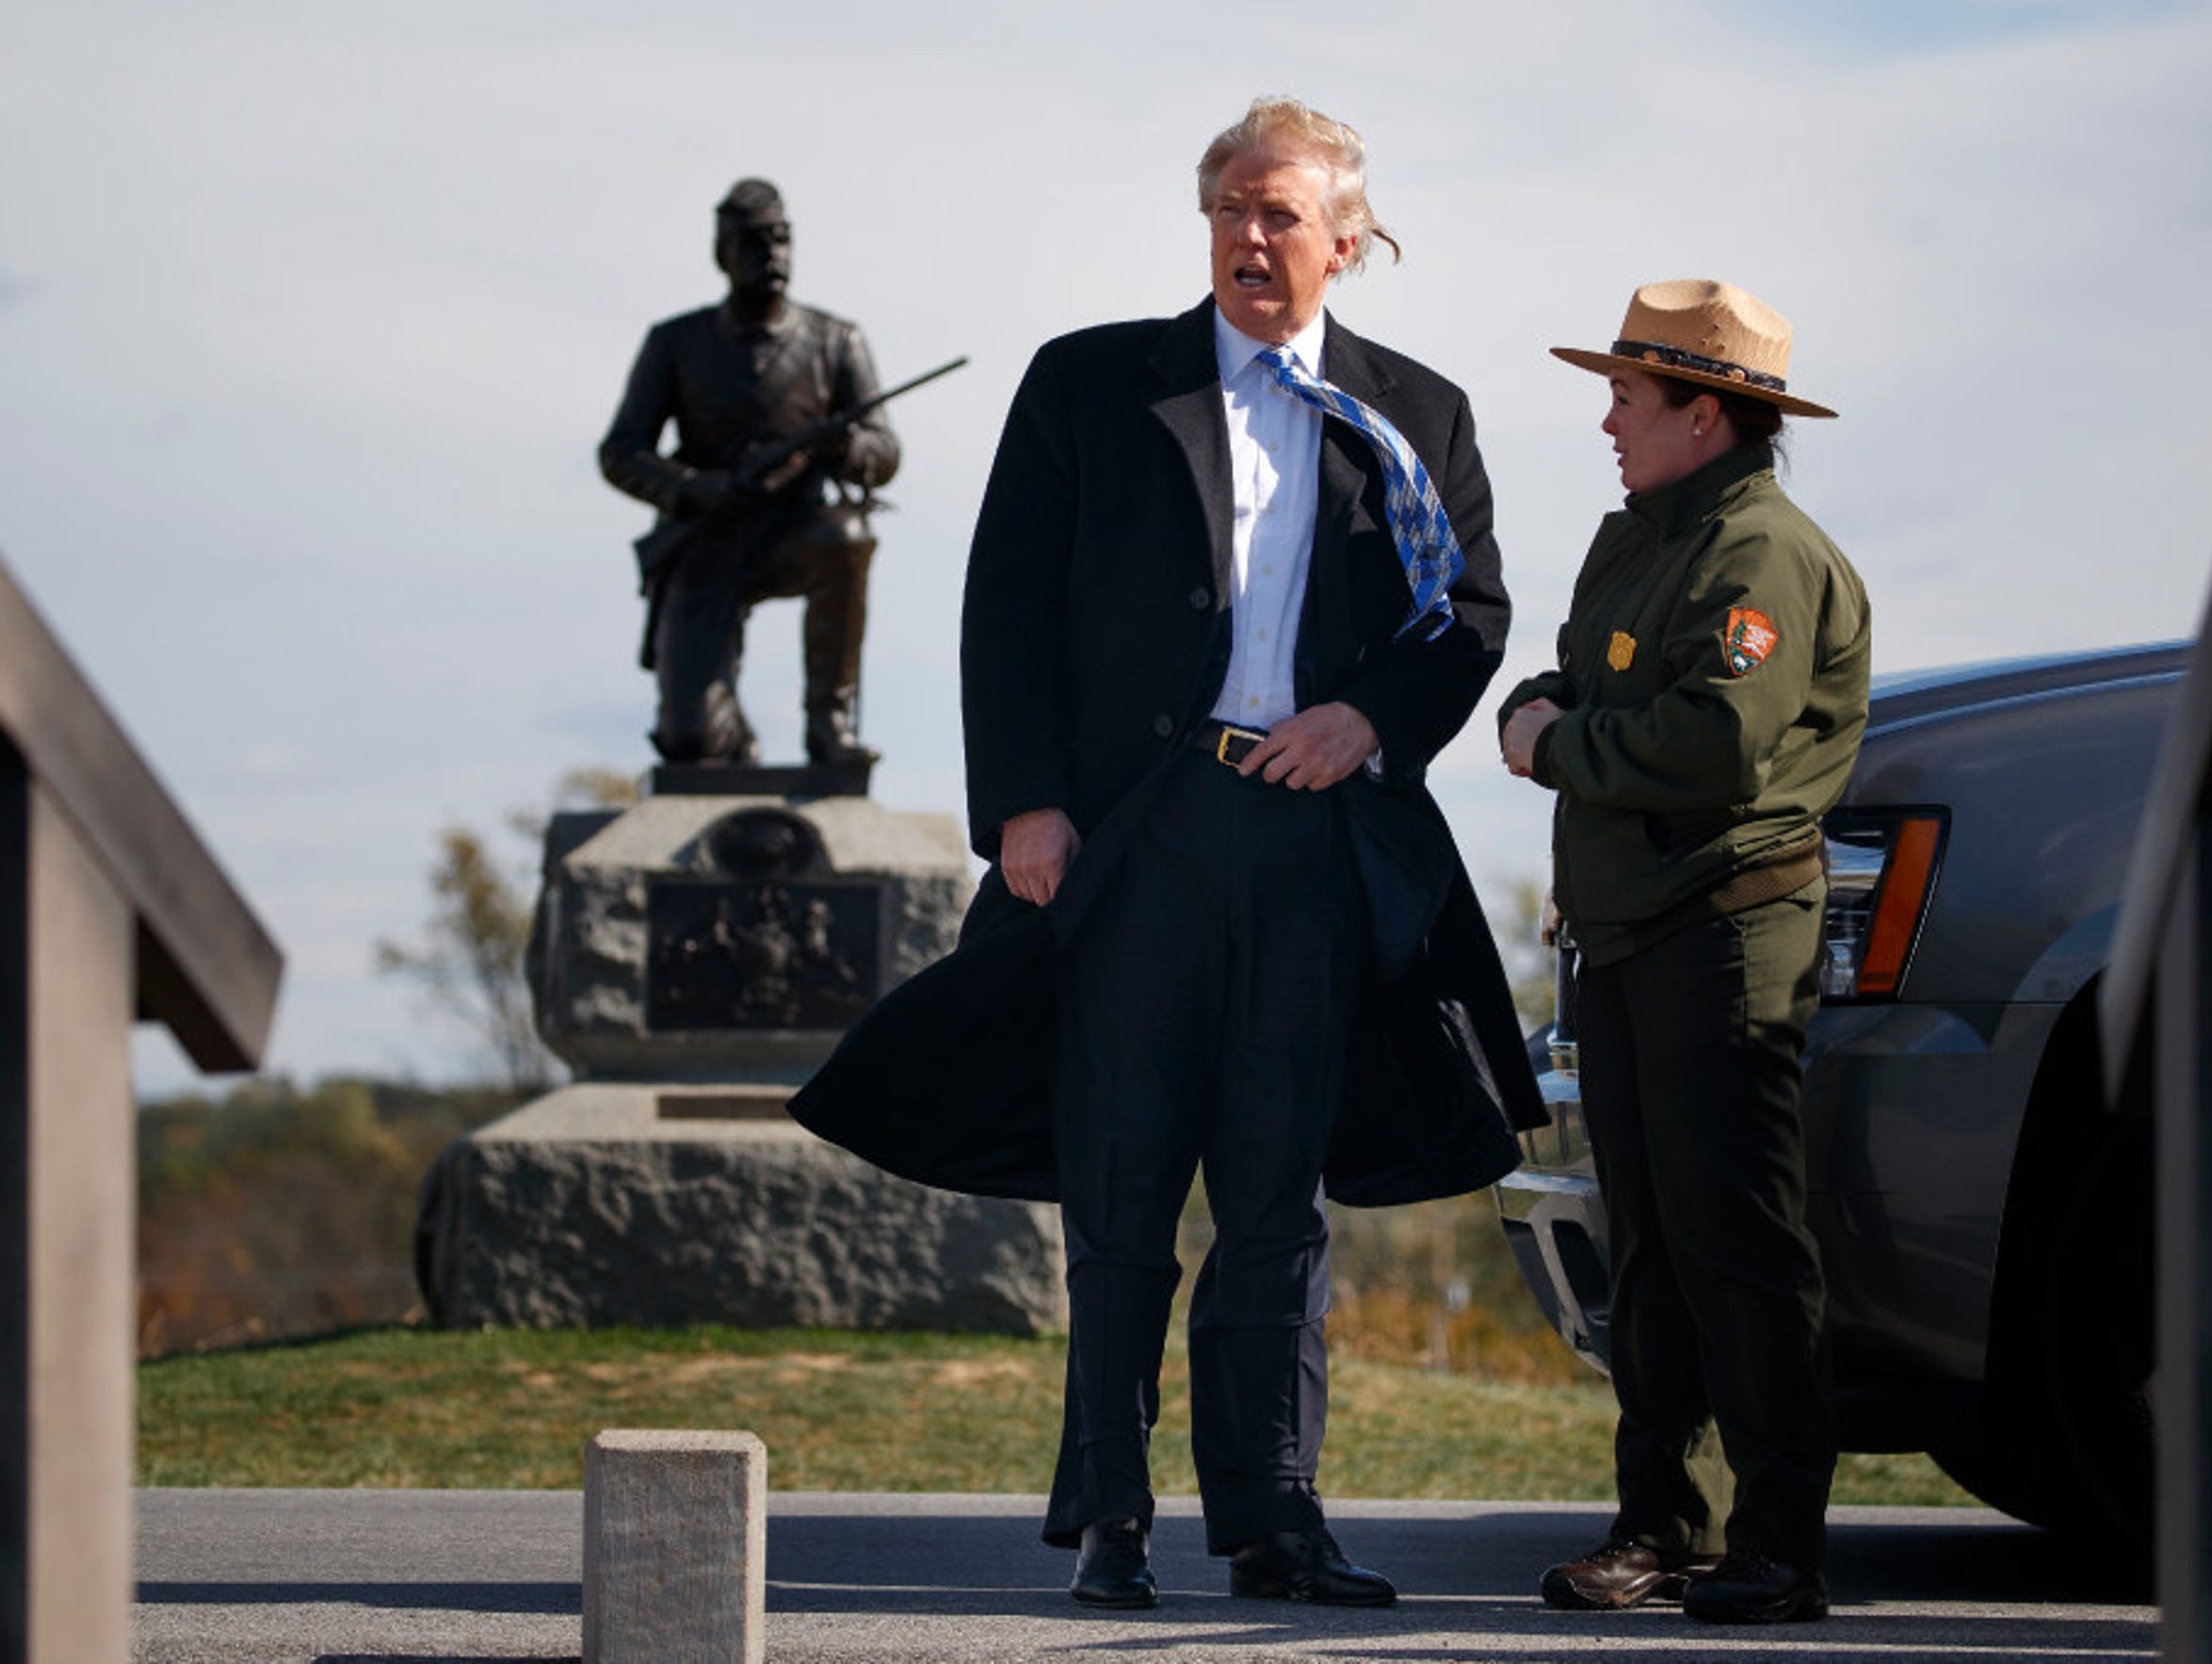 Donald Trump in Gettysburg, Pa., on Oct. 22, 2016,